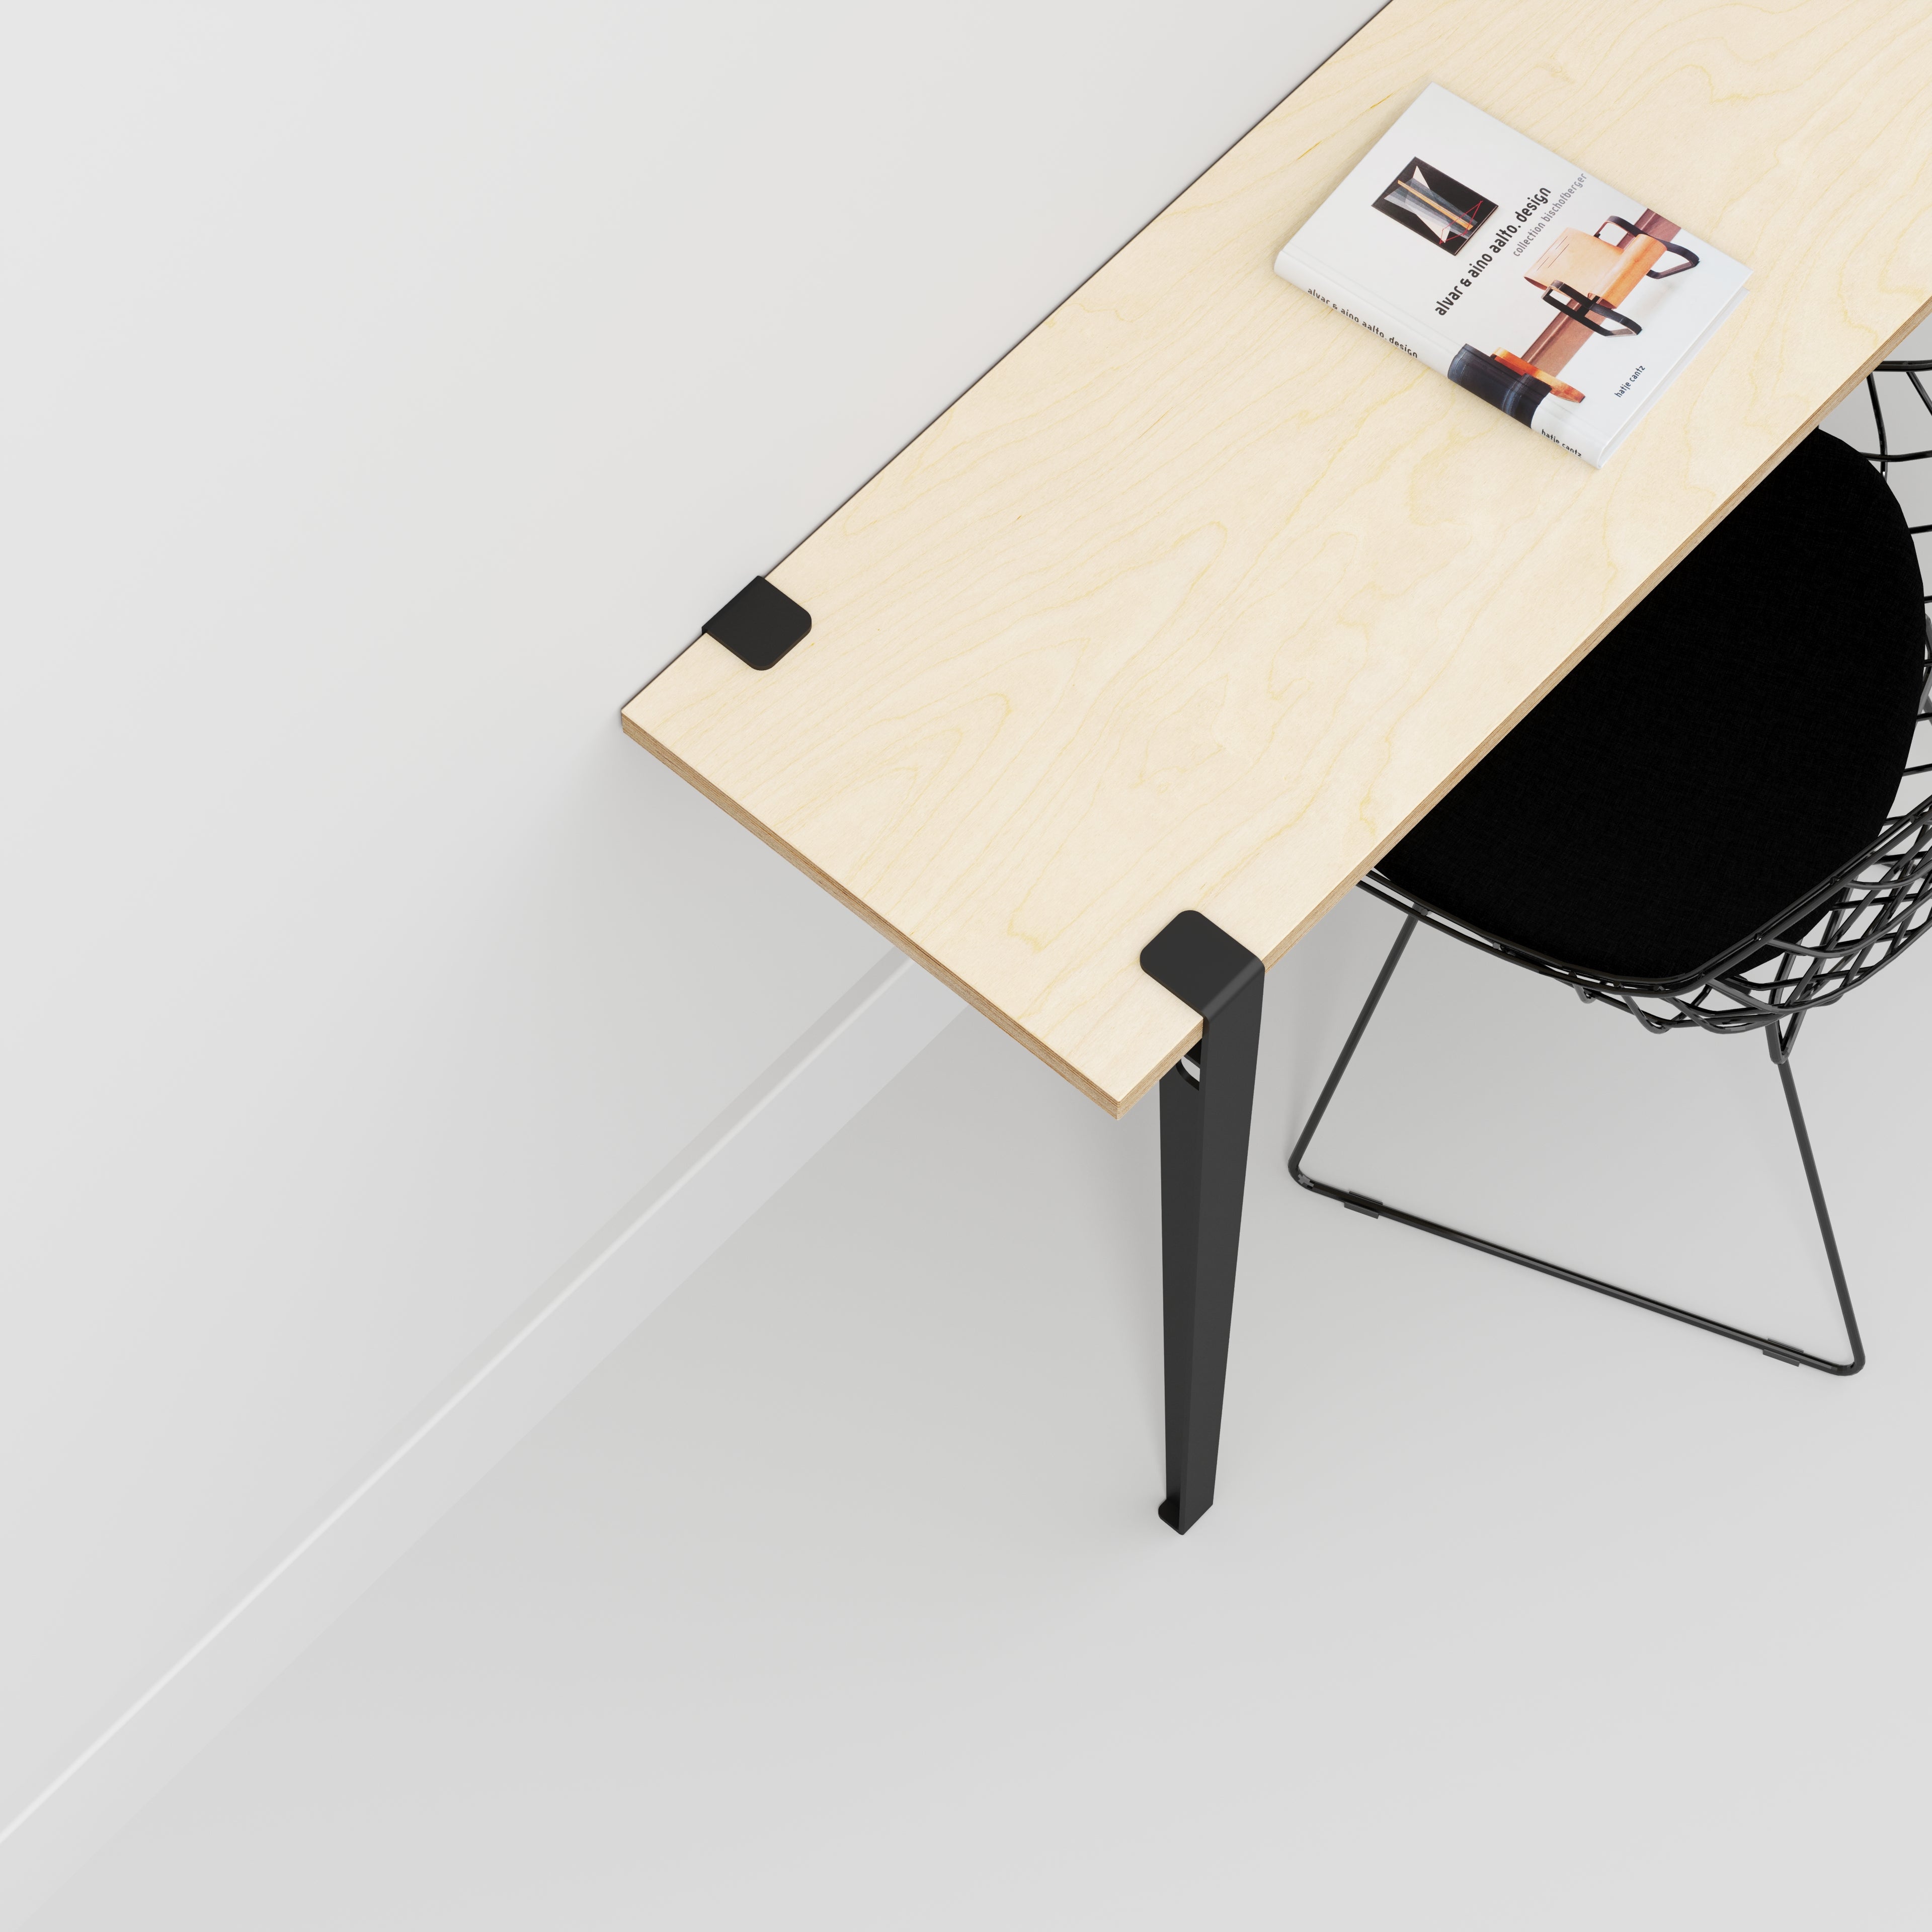 Custom Plywood Wall Desk with Tiptoe Legs and Wall Brackets